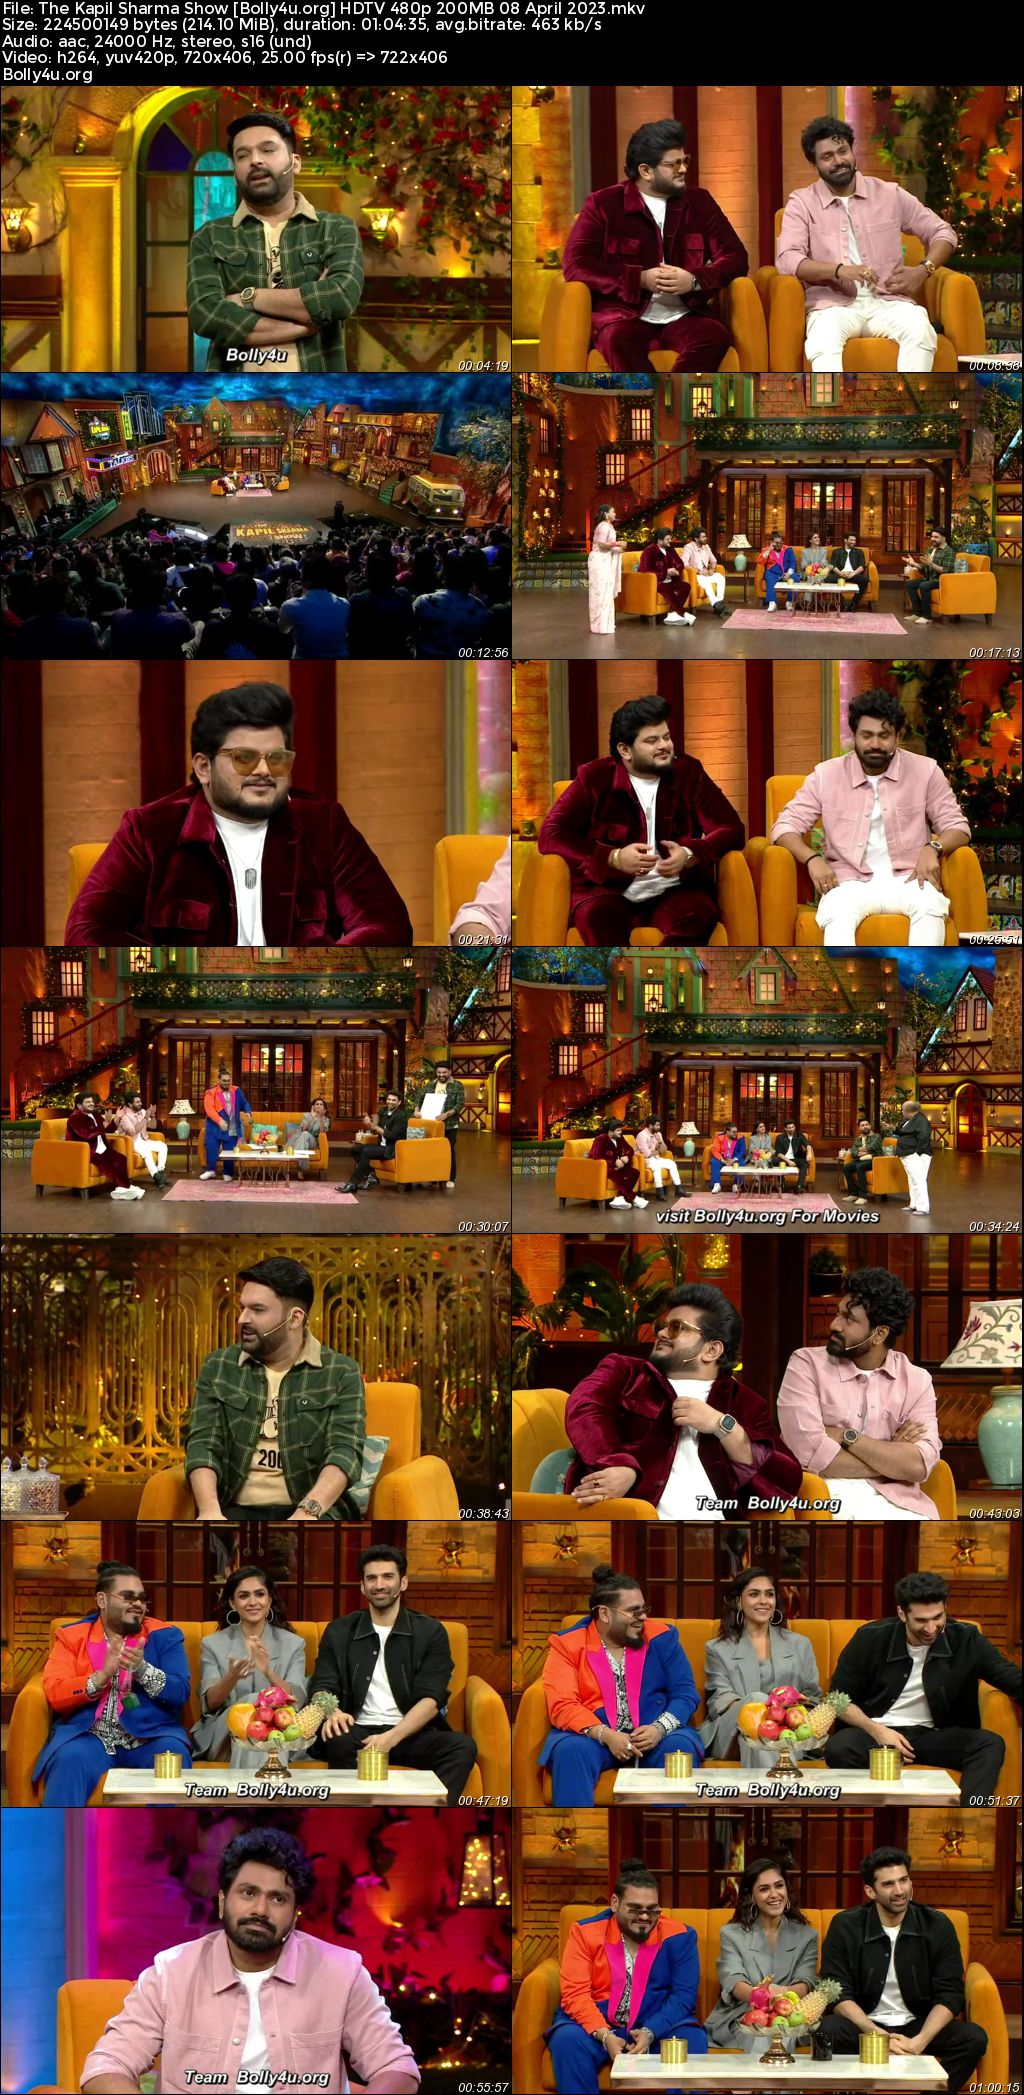 The Kapil Sharma Show HDTV 480p 200MB 08 April 2023 download